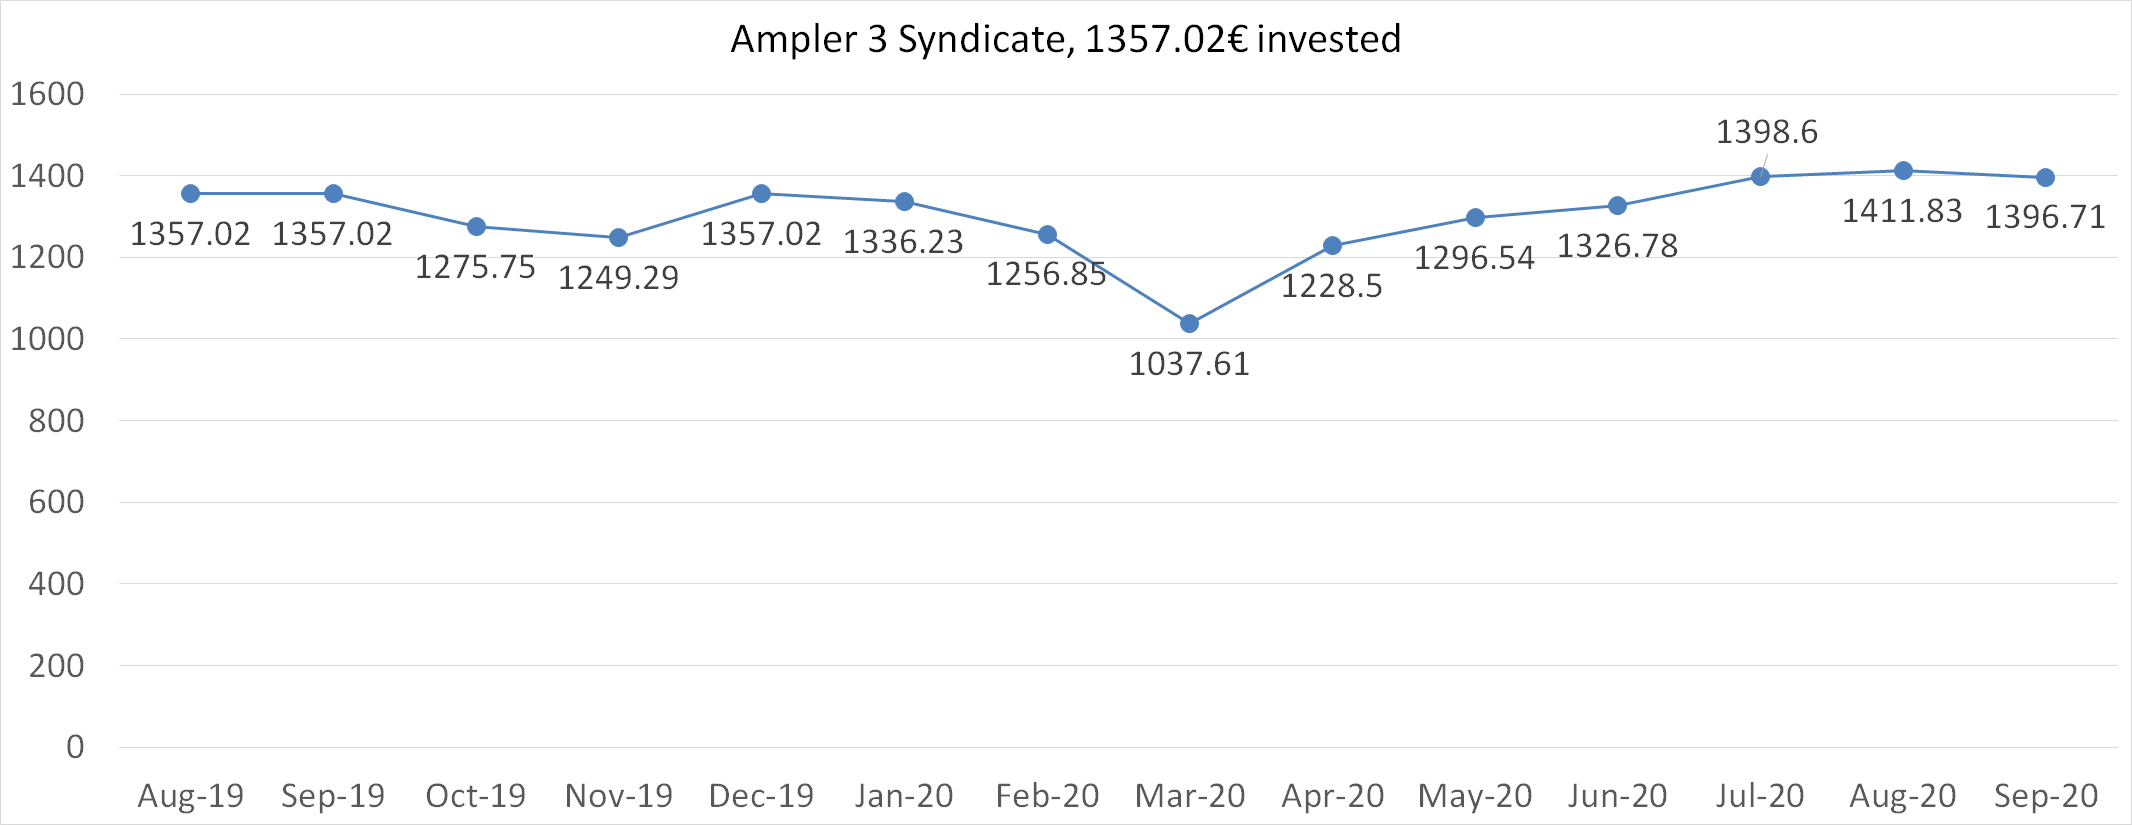 Ampler 3 syndicate worth september 2020